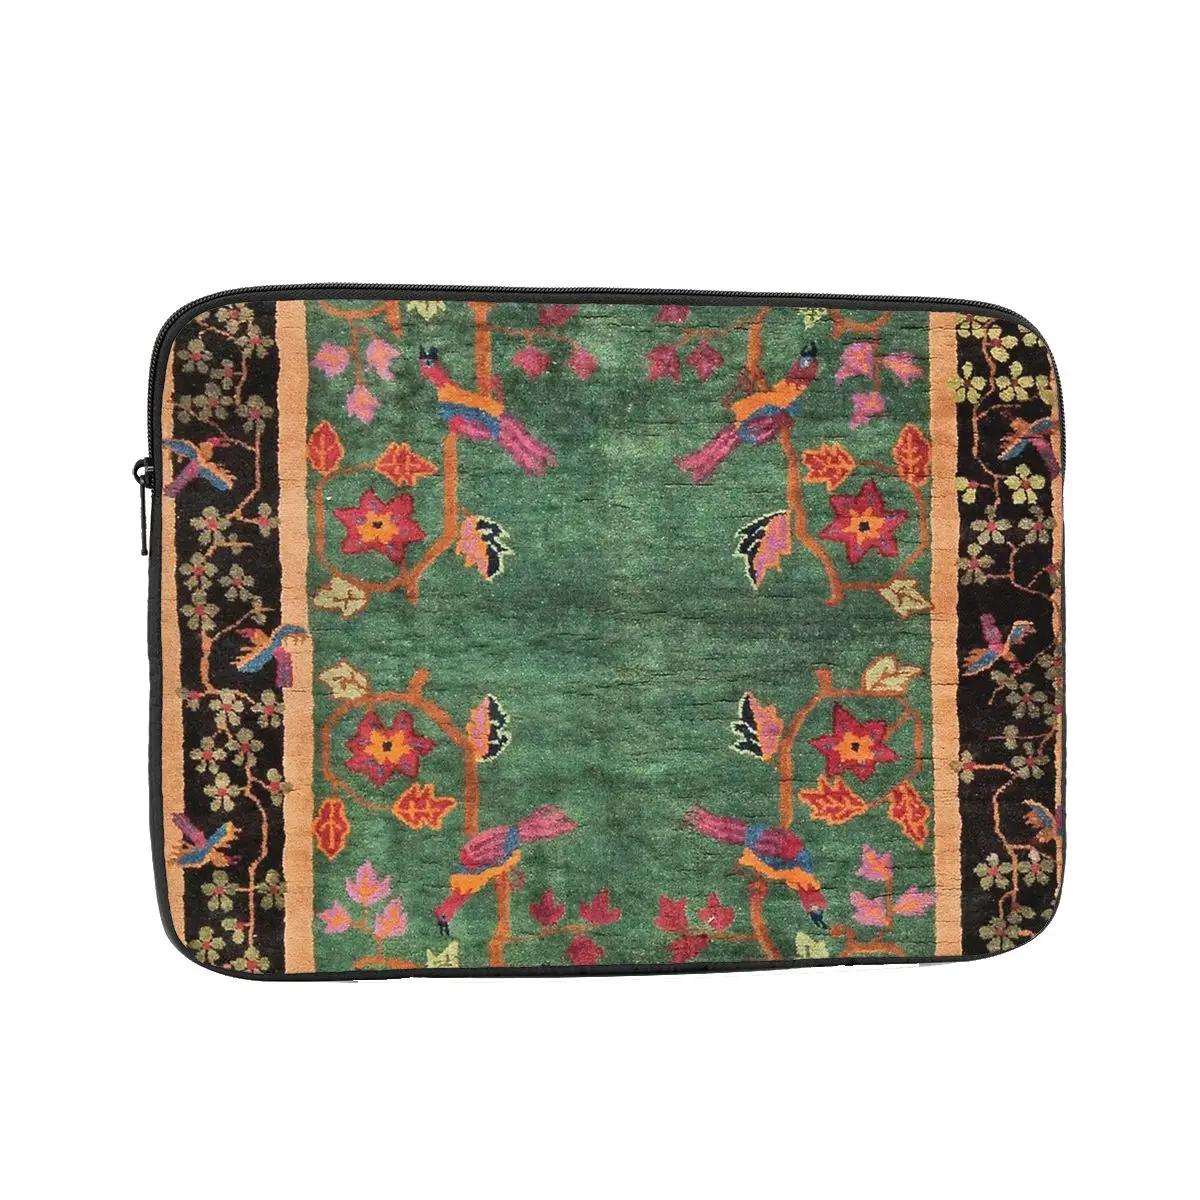 Vintage Art Deco Chinese Persian Laptop Sleeve Cover Bag 12 13 15 17 Notebook Bag Sleeve Tablet Shockproof Case Bag